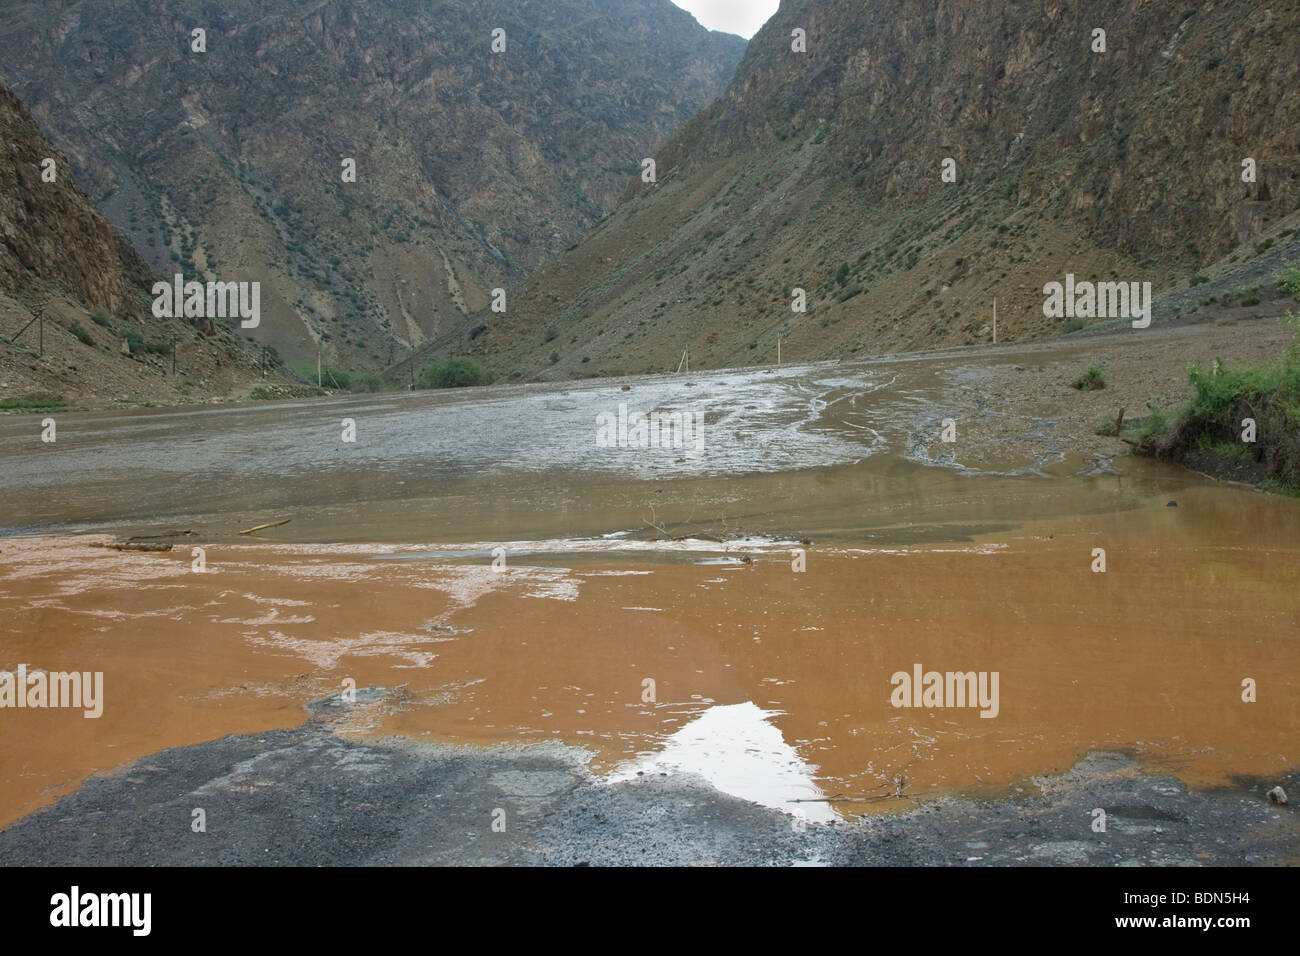 Mudslide covering the road in rural Kyrgyzstan Stock Photo